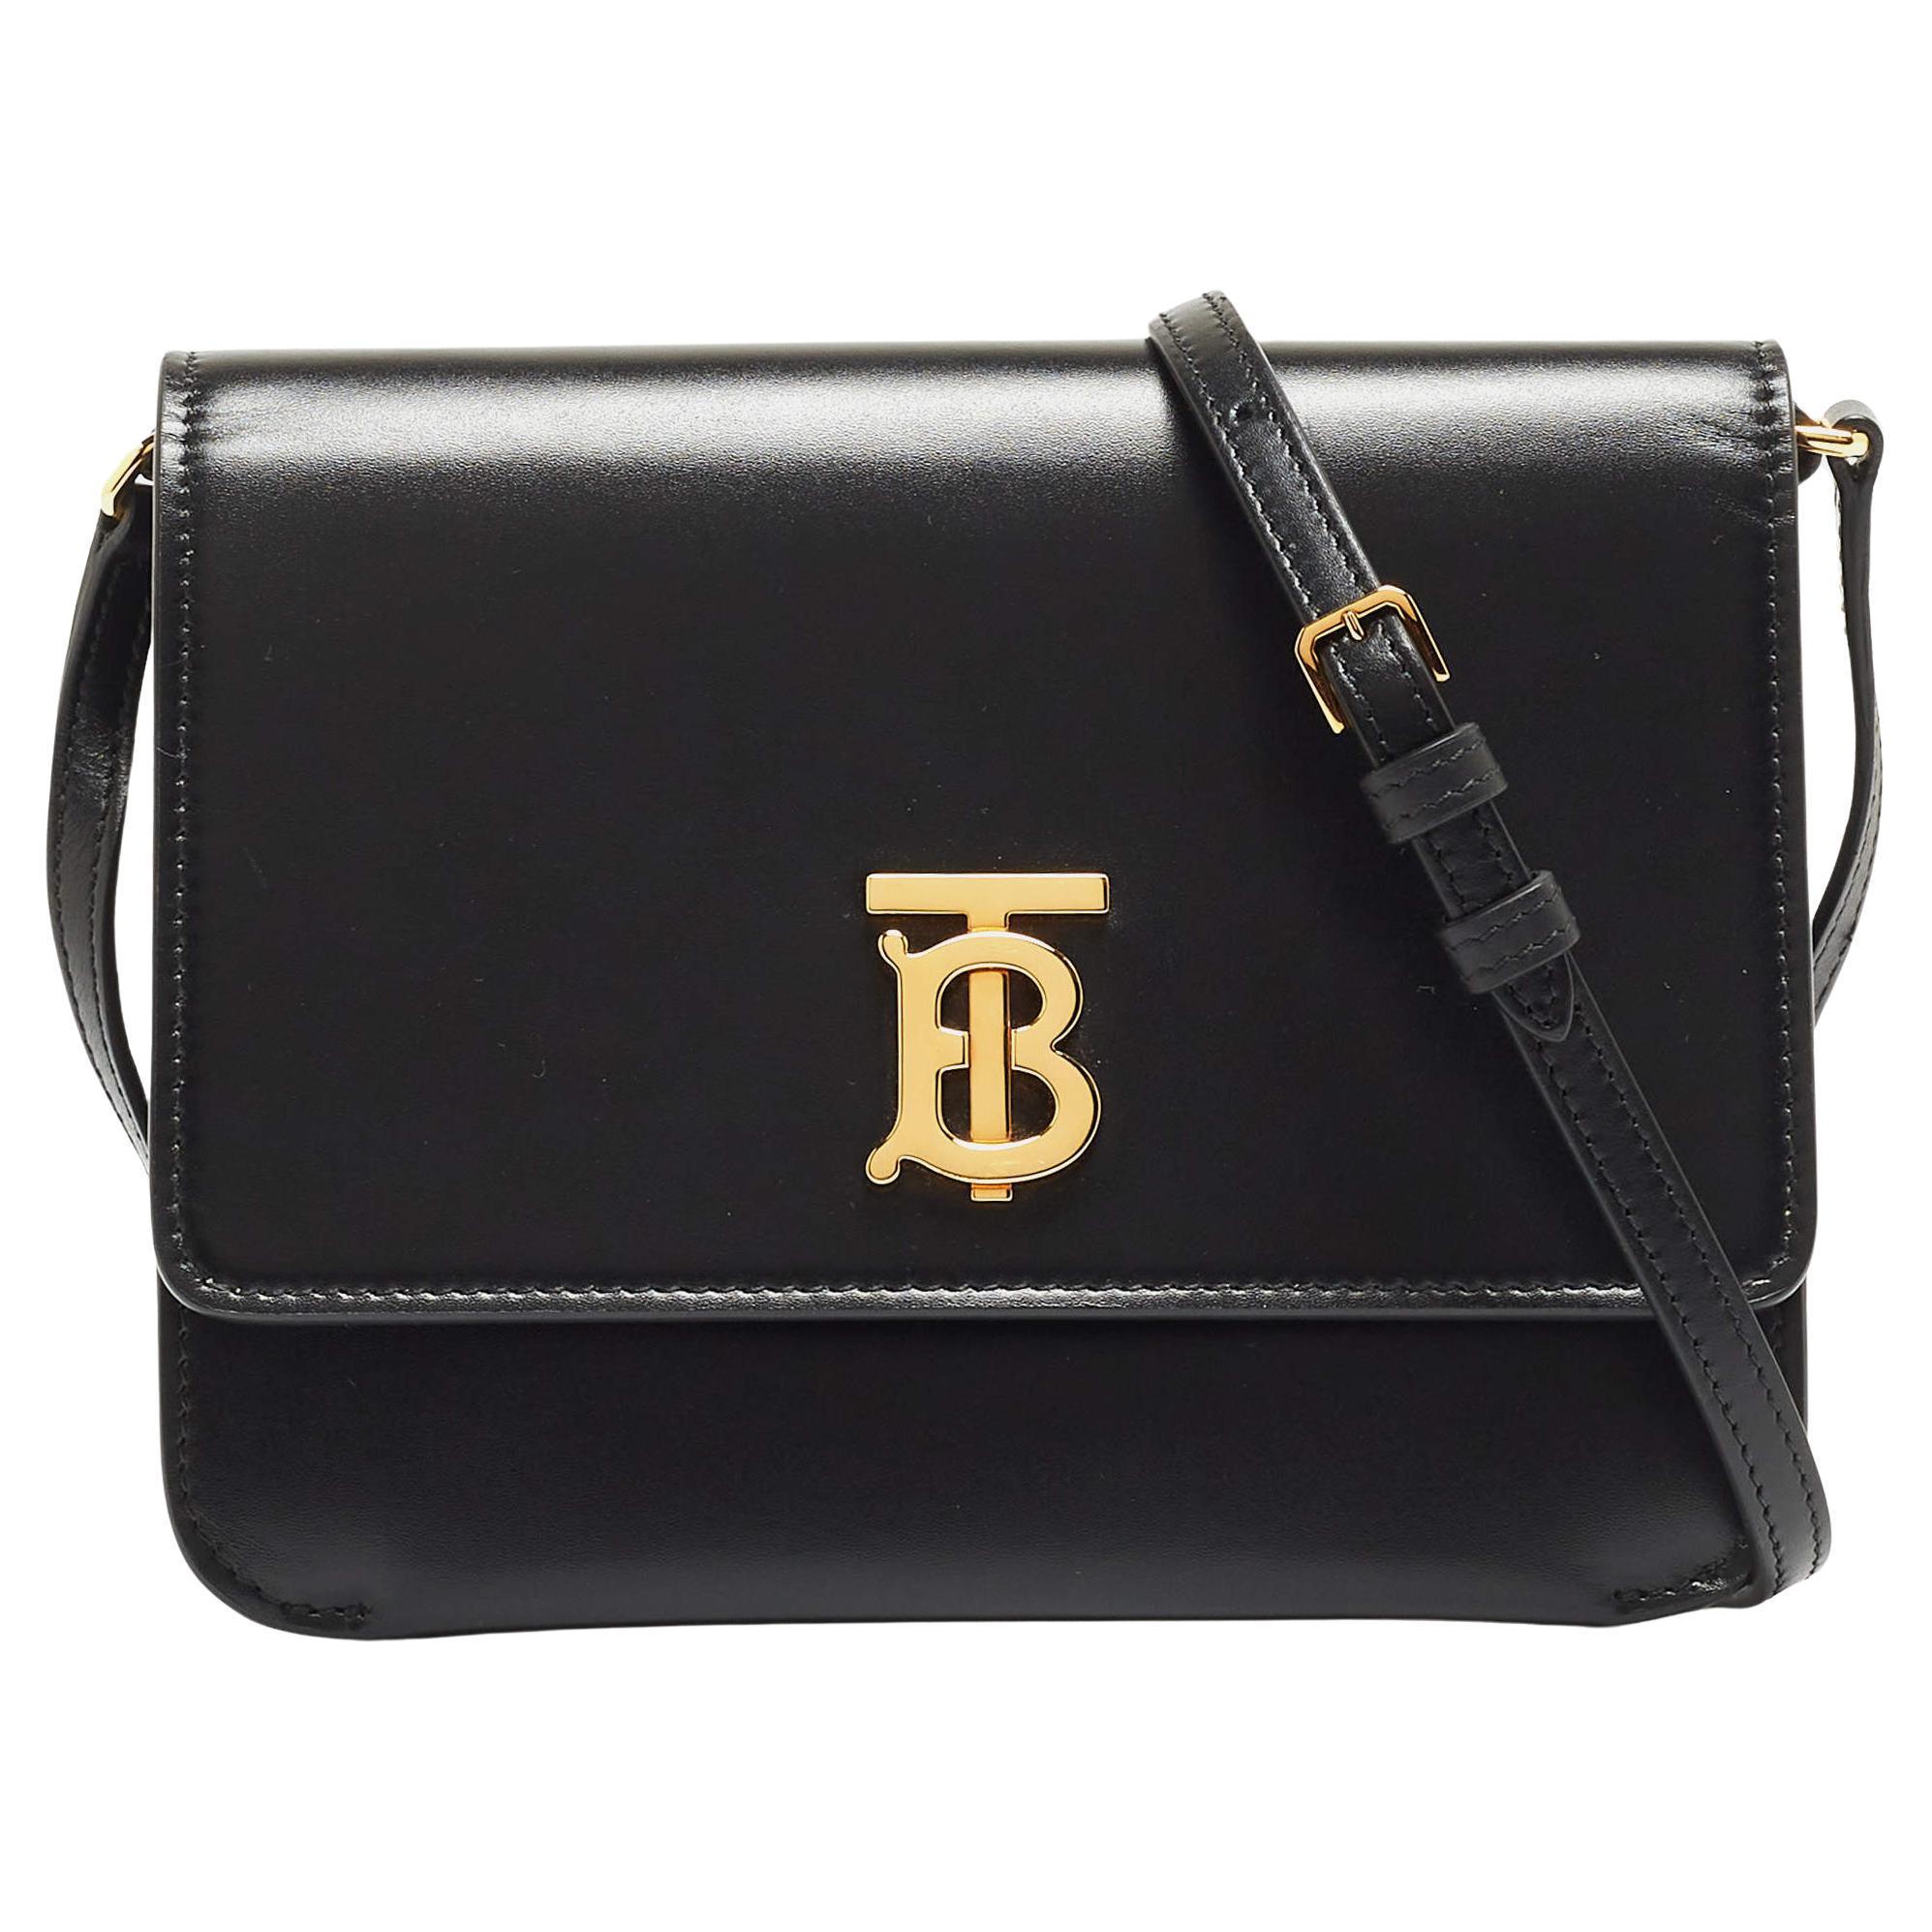 Burberry Black Leather Mini TB Flap Crossbody Bag